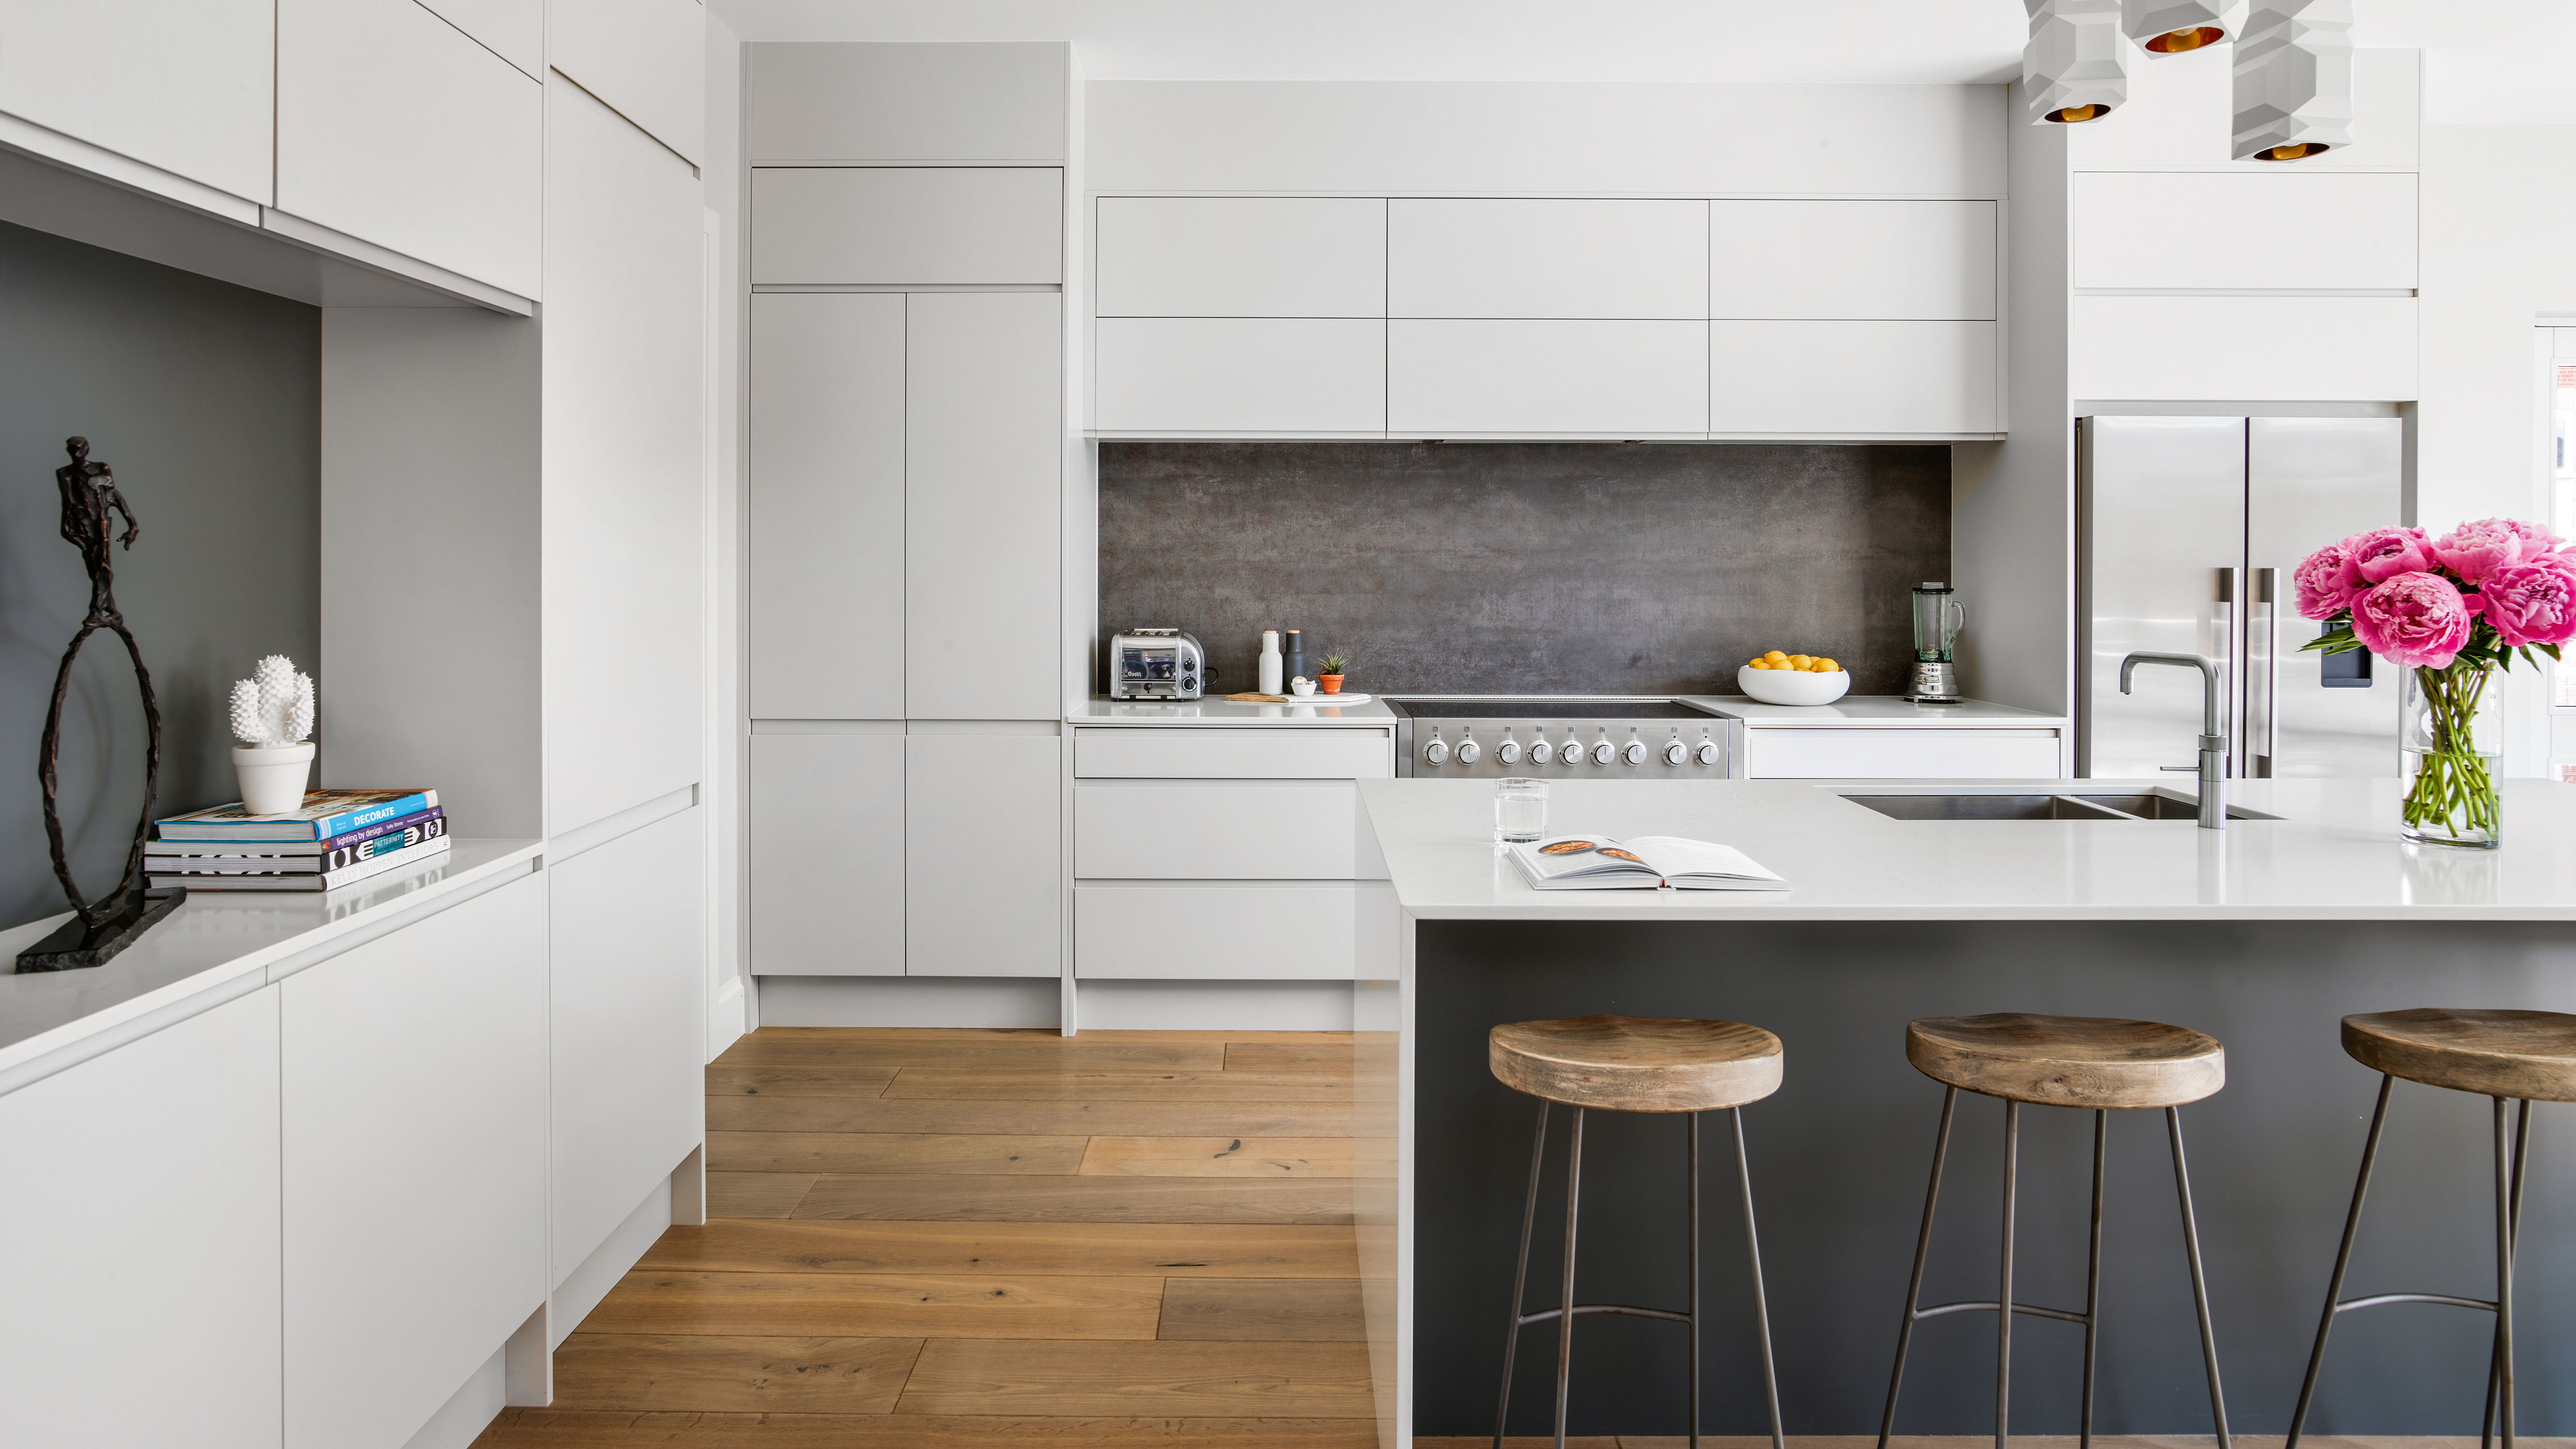 Minimalist kitchen ideas: 10 simple schemes for the modern home |